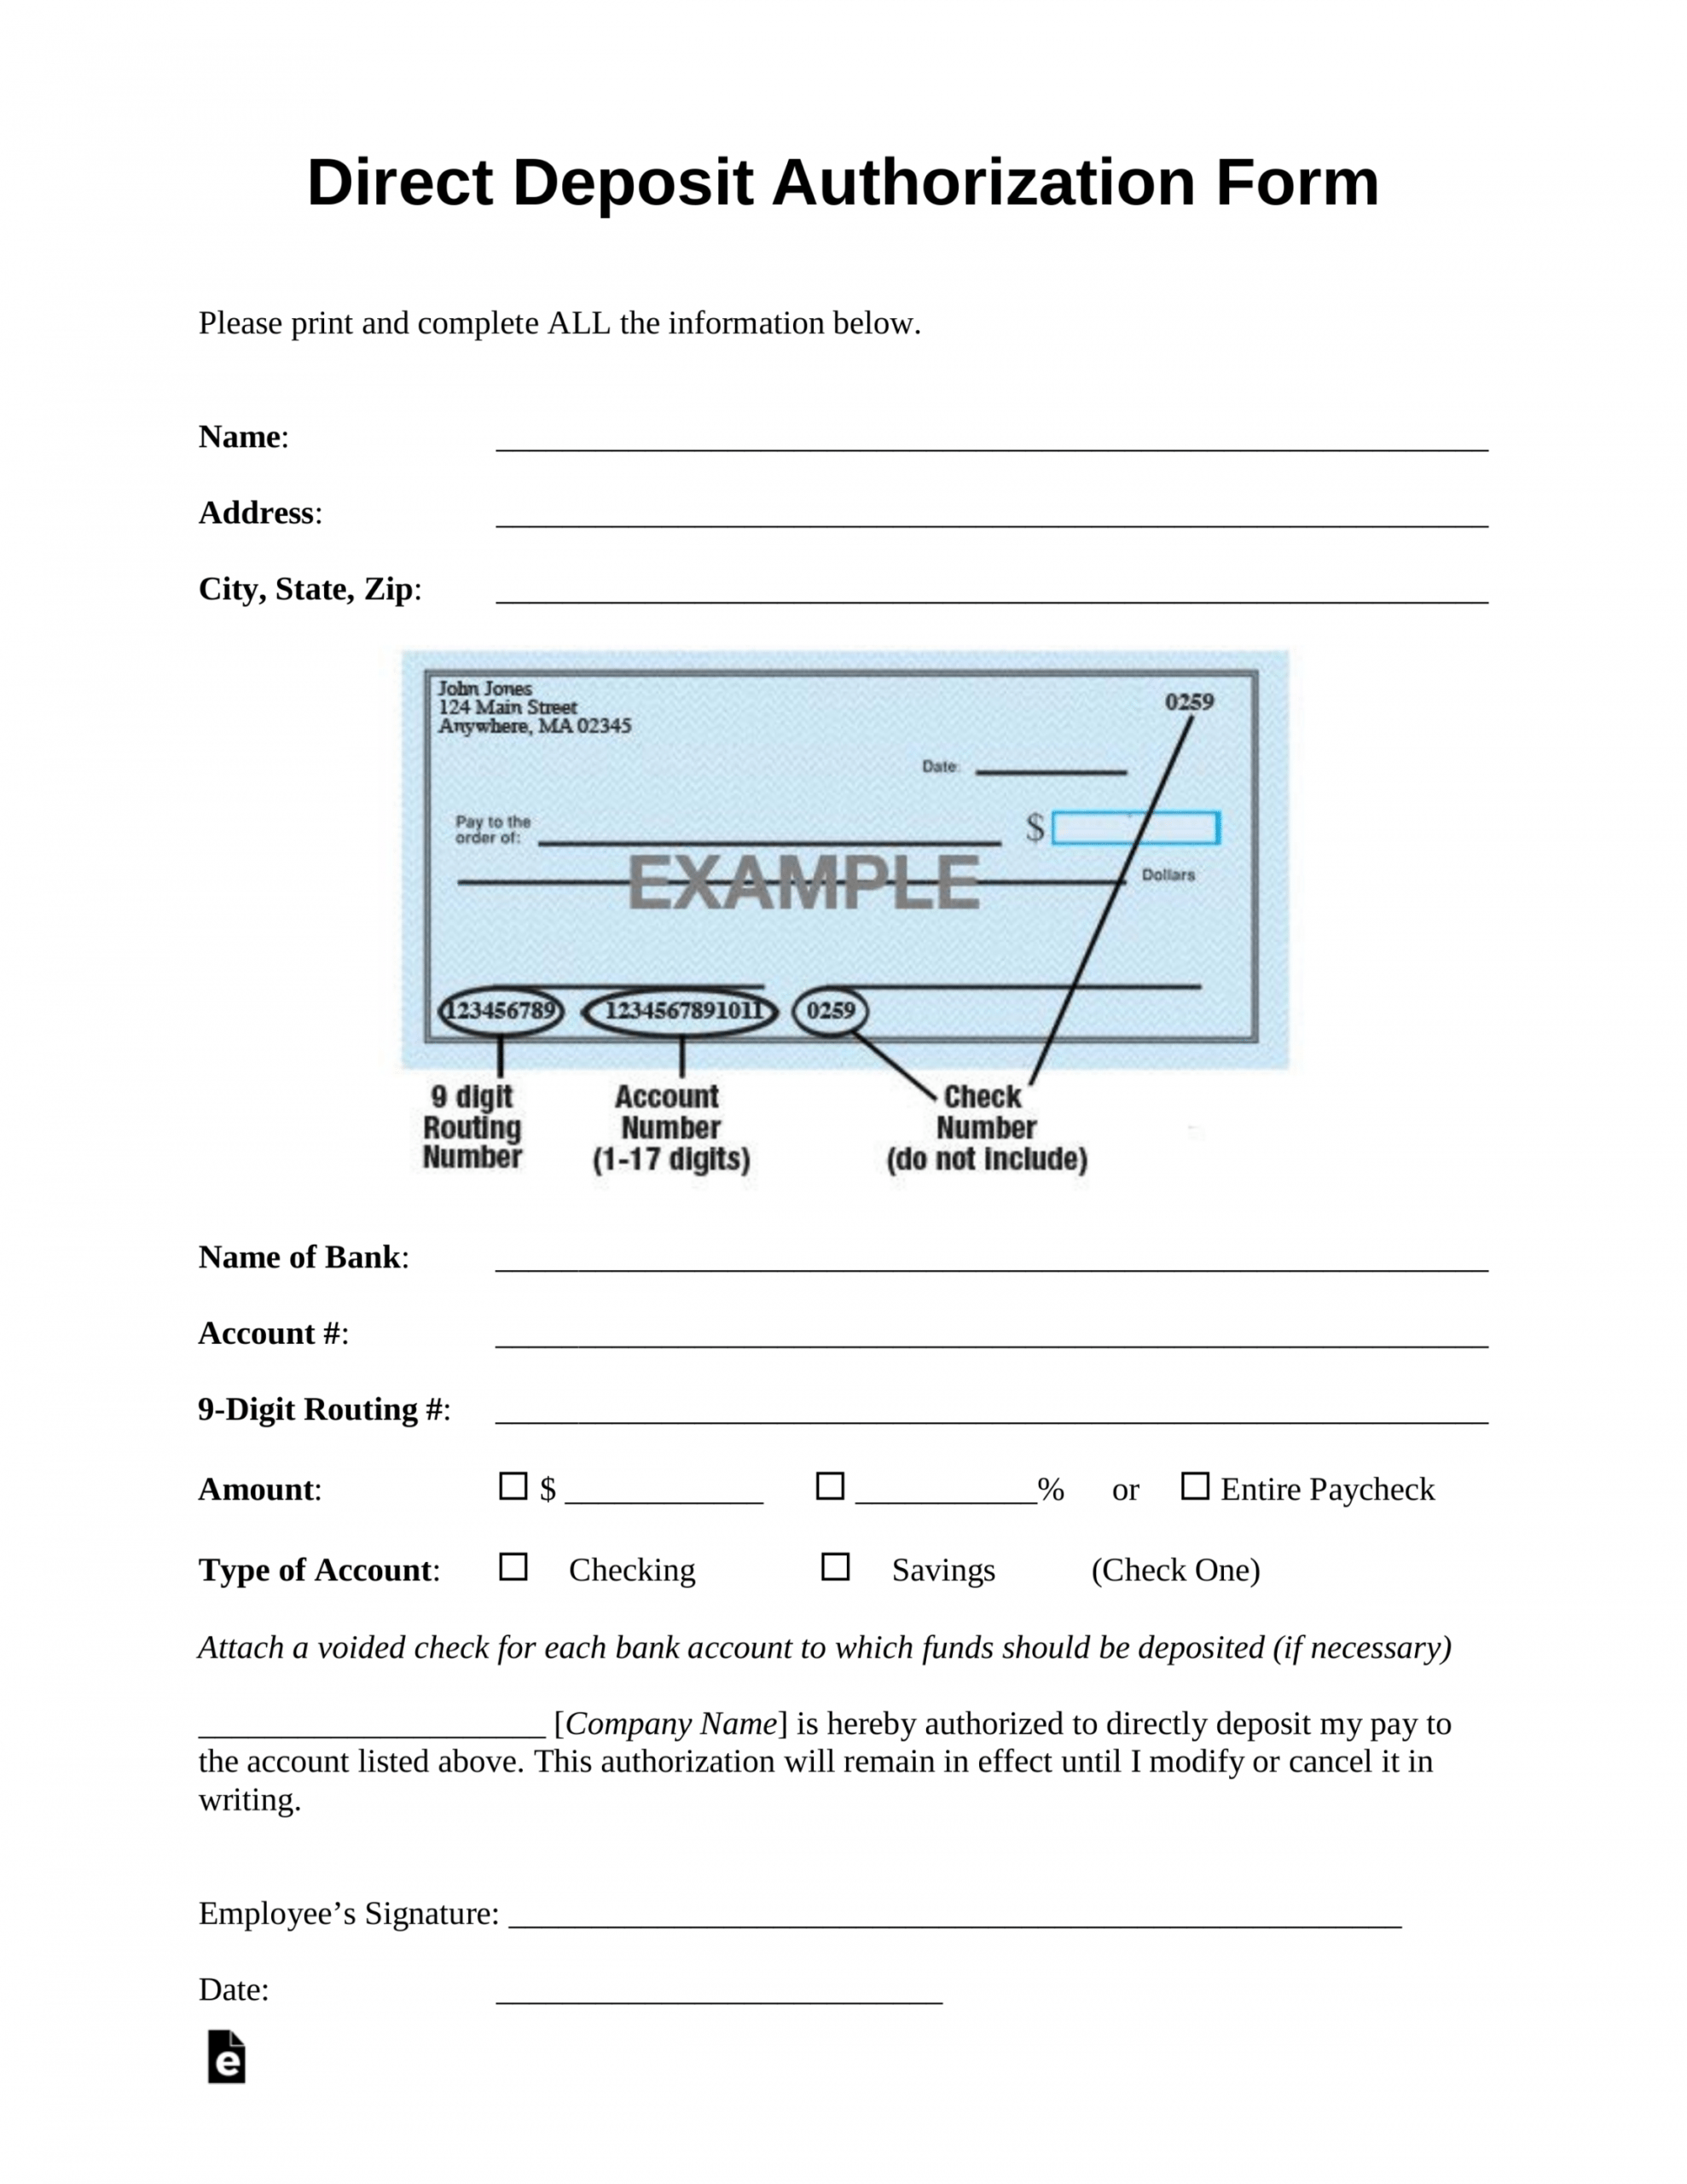 printable 001 generic direct deposit authorization form template direct deposit authorization form template word